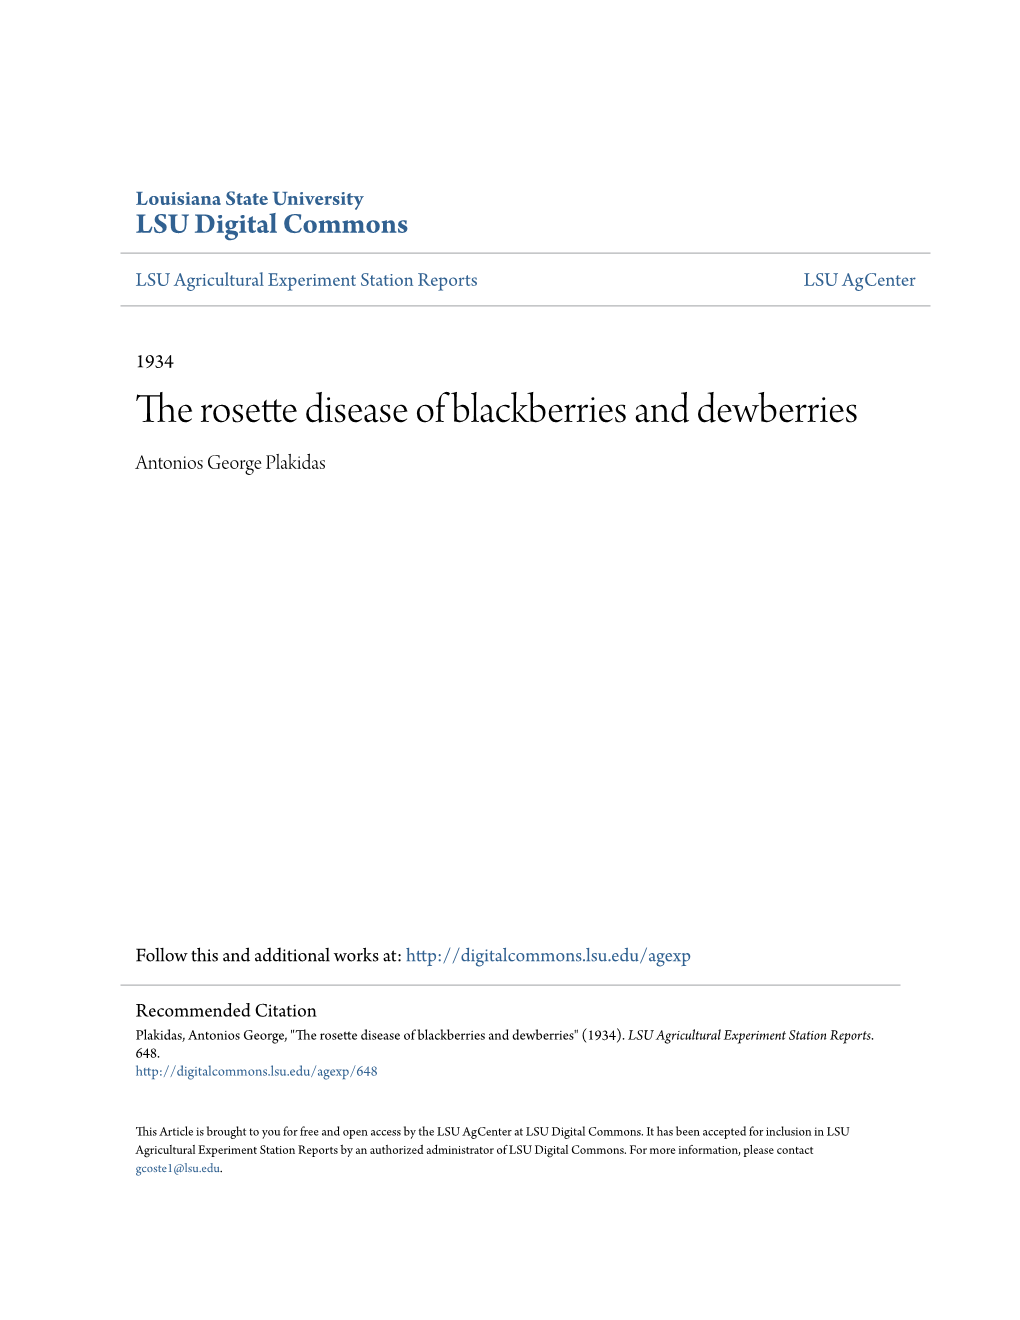 The Rosette Disease of Blackberries and Dewberries Is Described